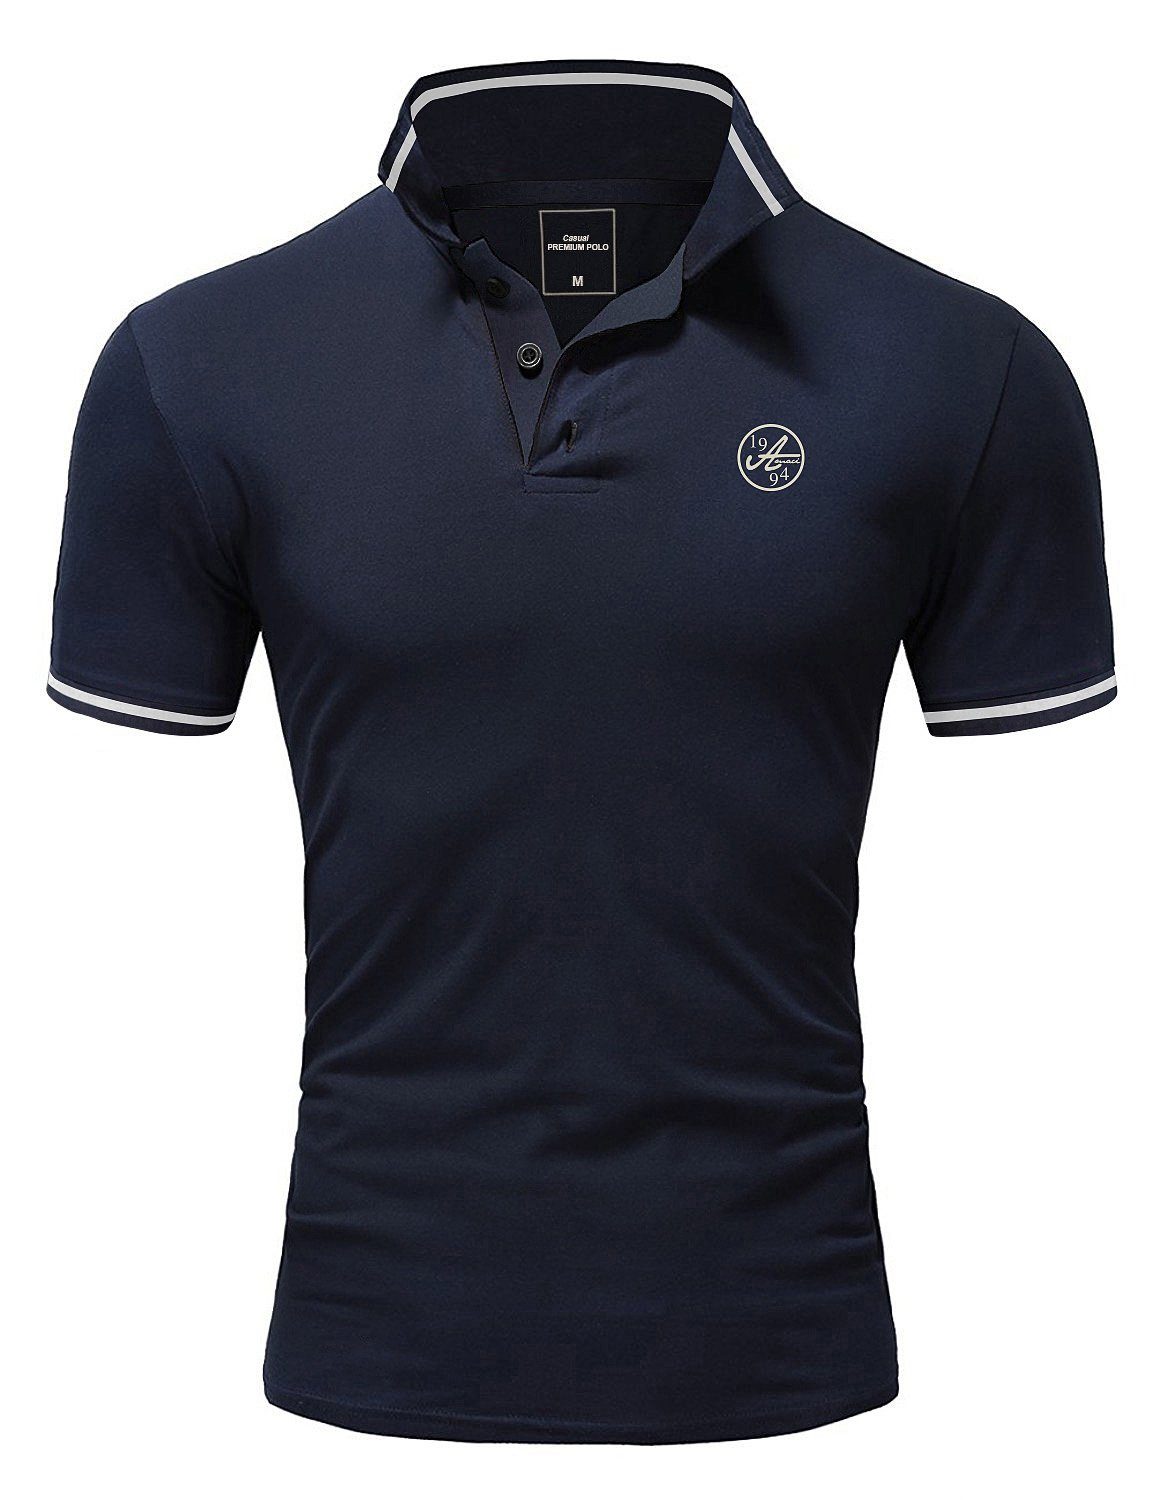 Amaci&Sons Basic Poloshirt Herren Kontrast T-Shirt Stickerei Navyblau/Weiß Kurzarm Polohemd MACON